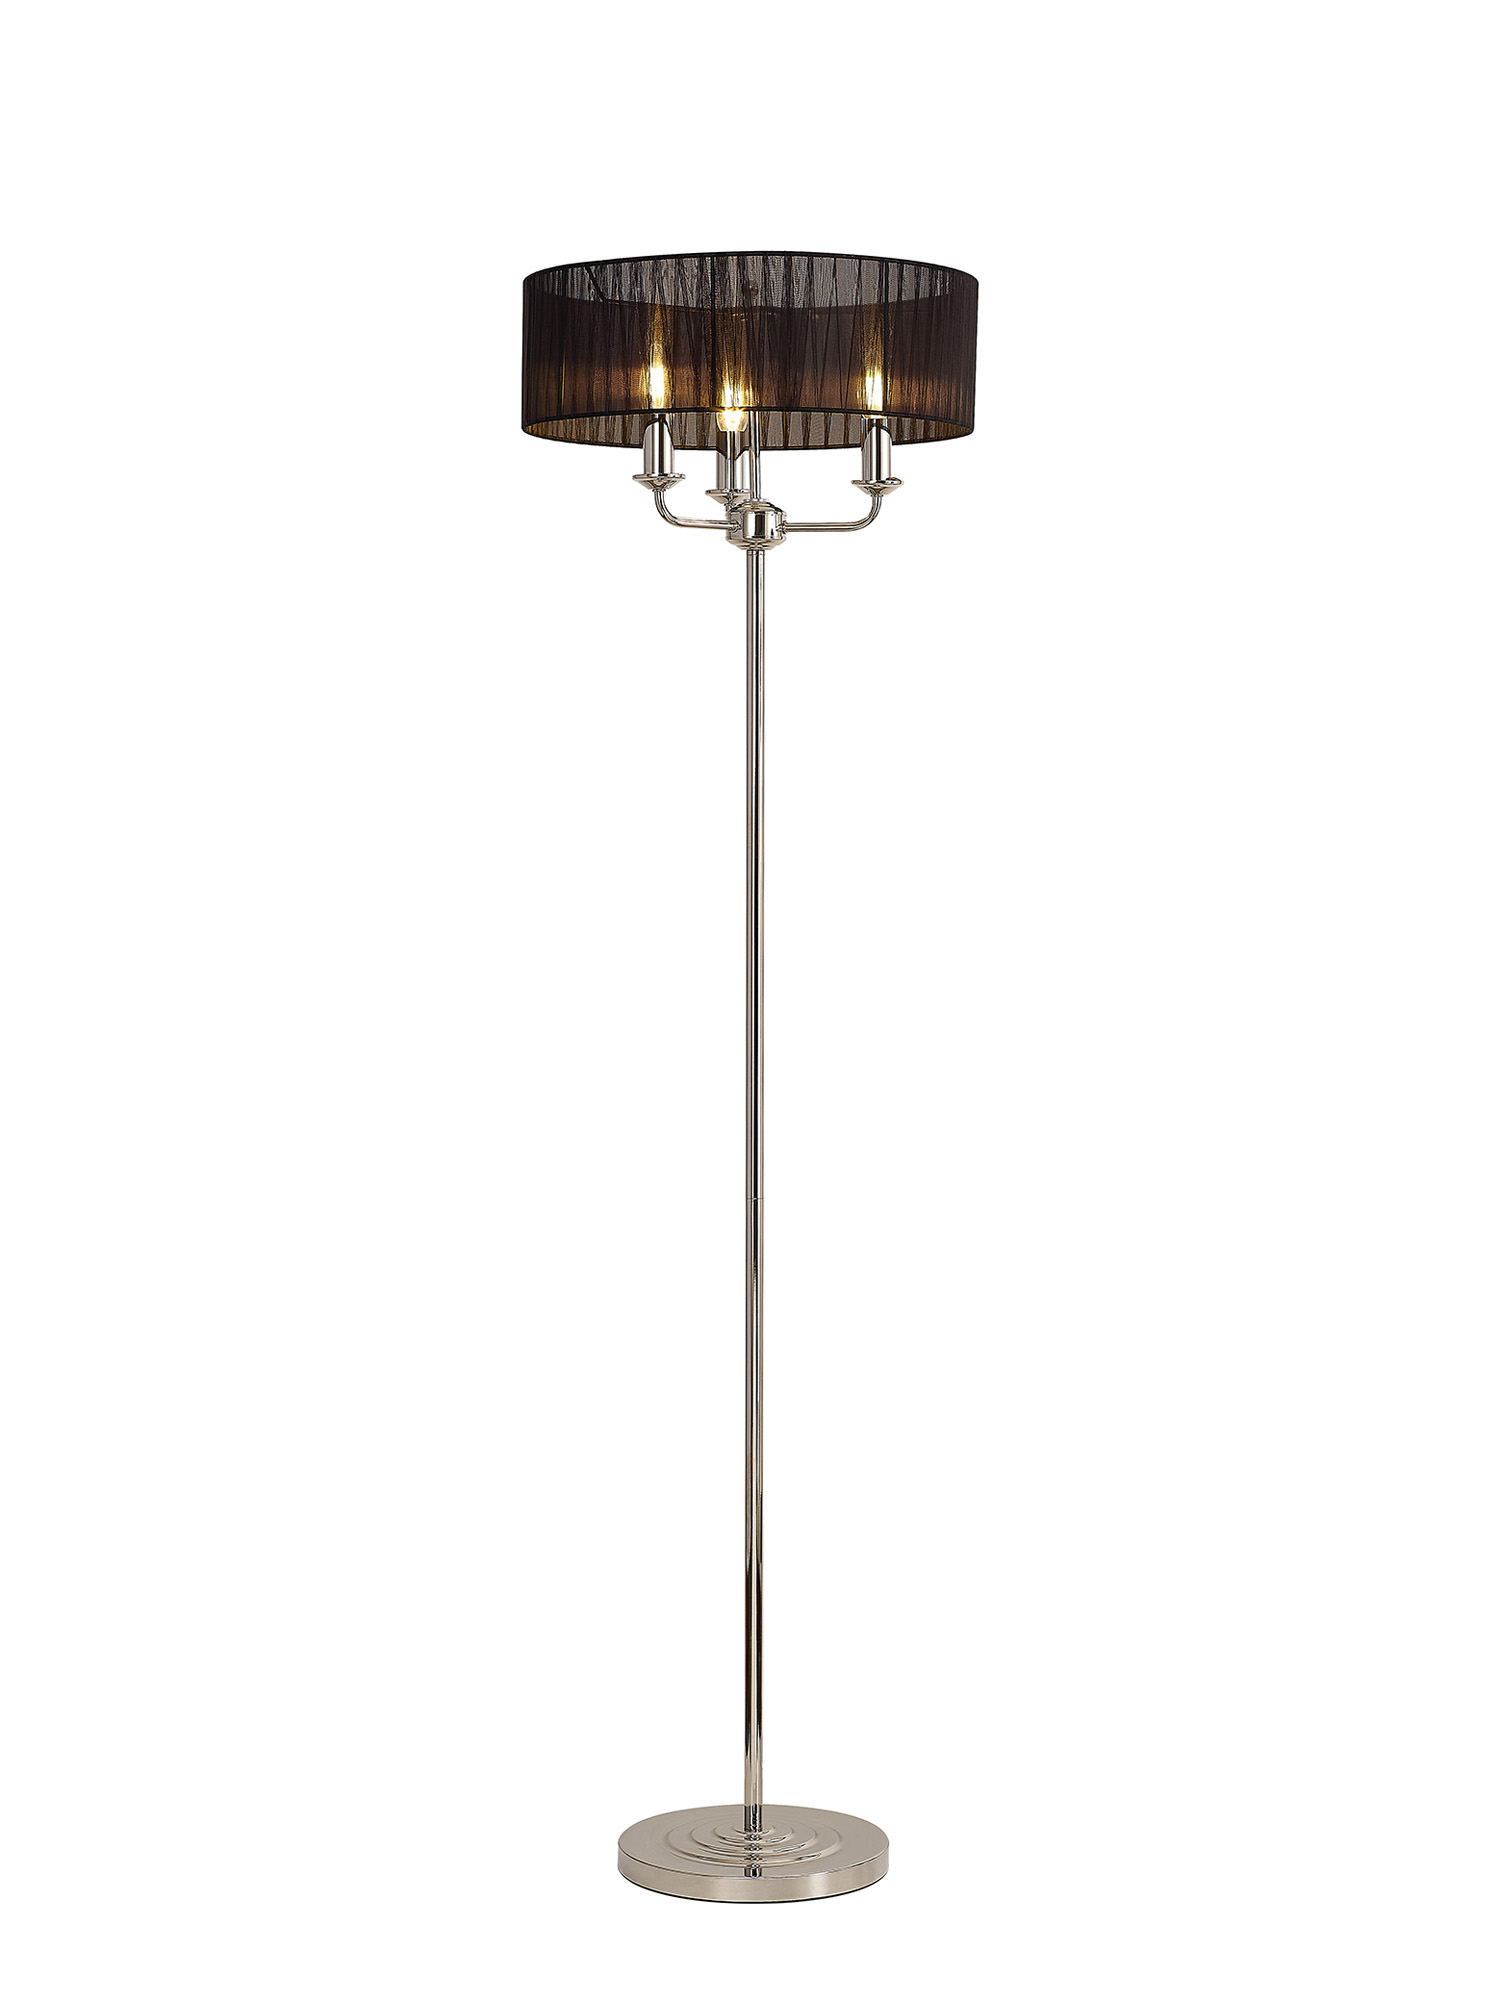 DK0888  Banyan 45cm 3 Light Floor Lamp Polished Nickel, Black